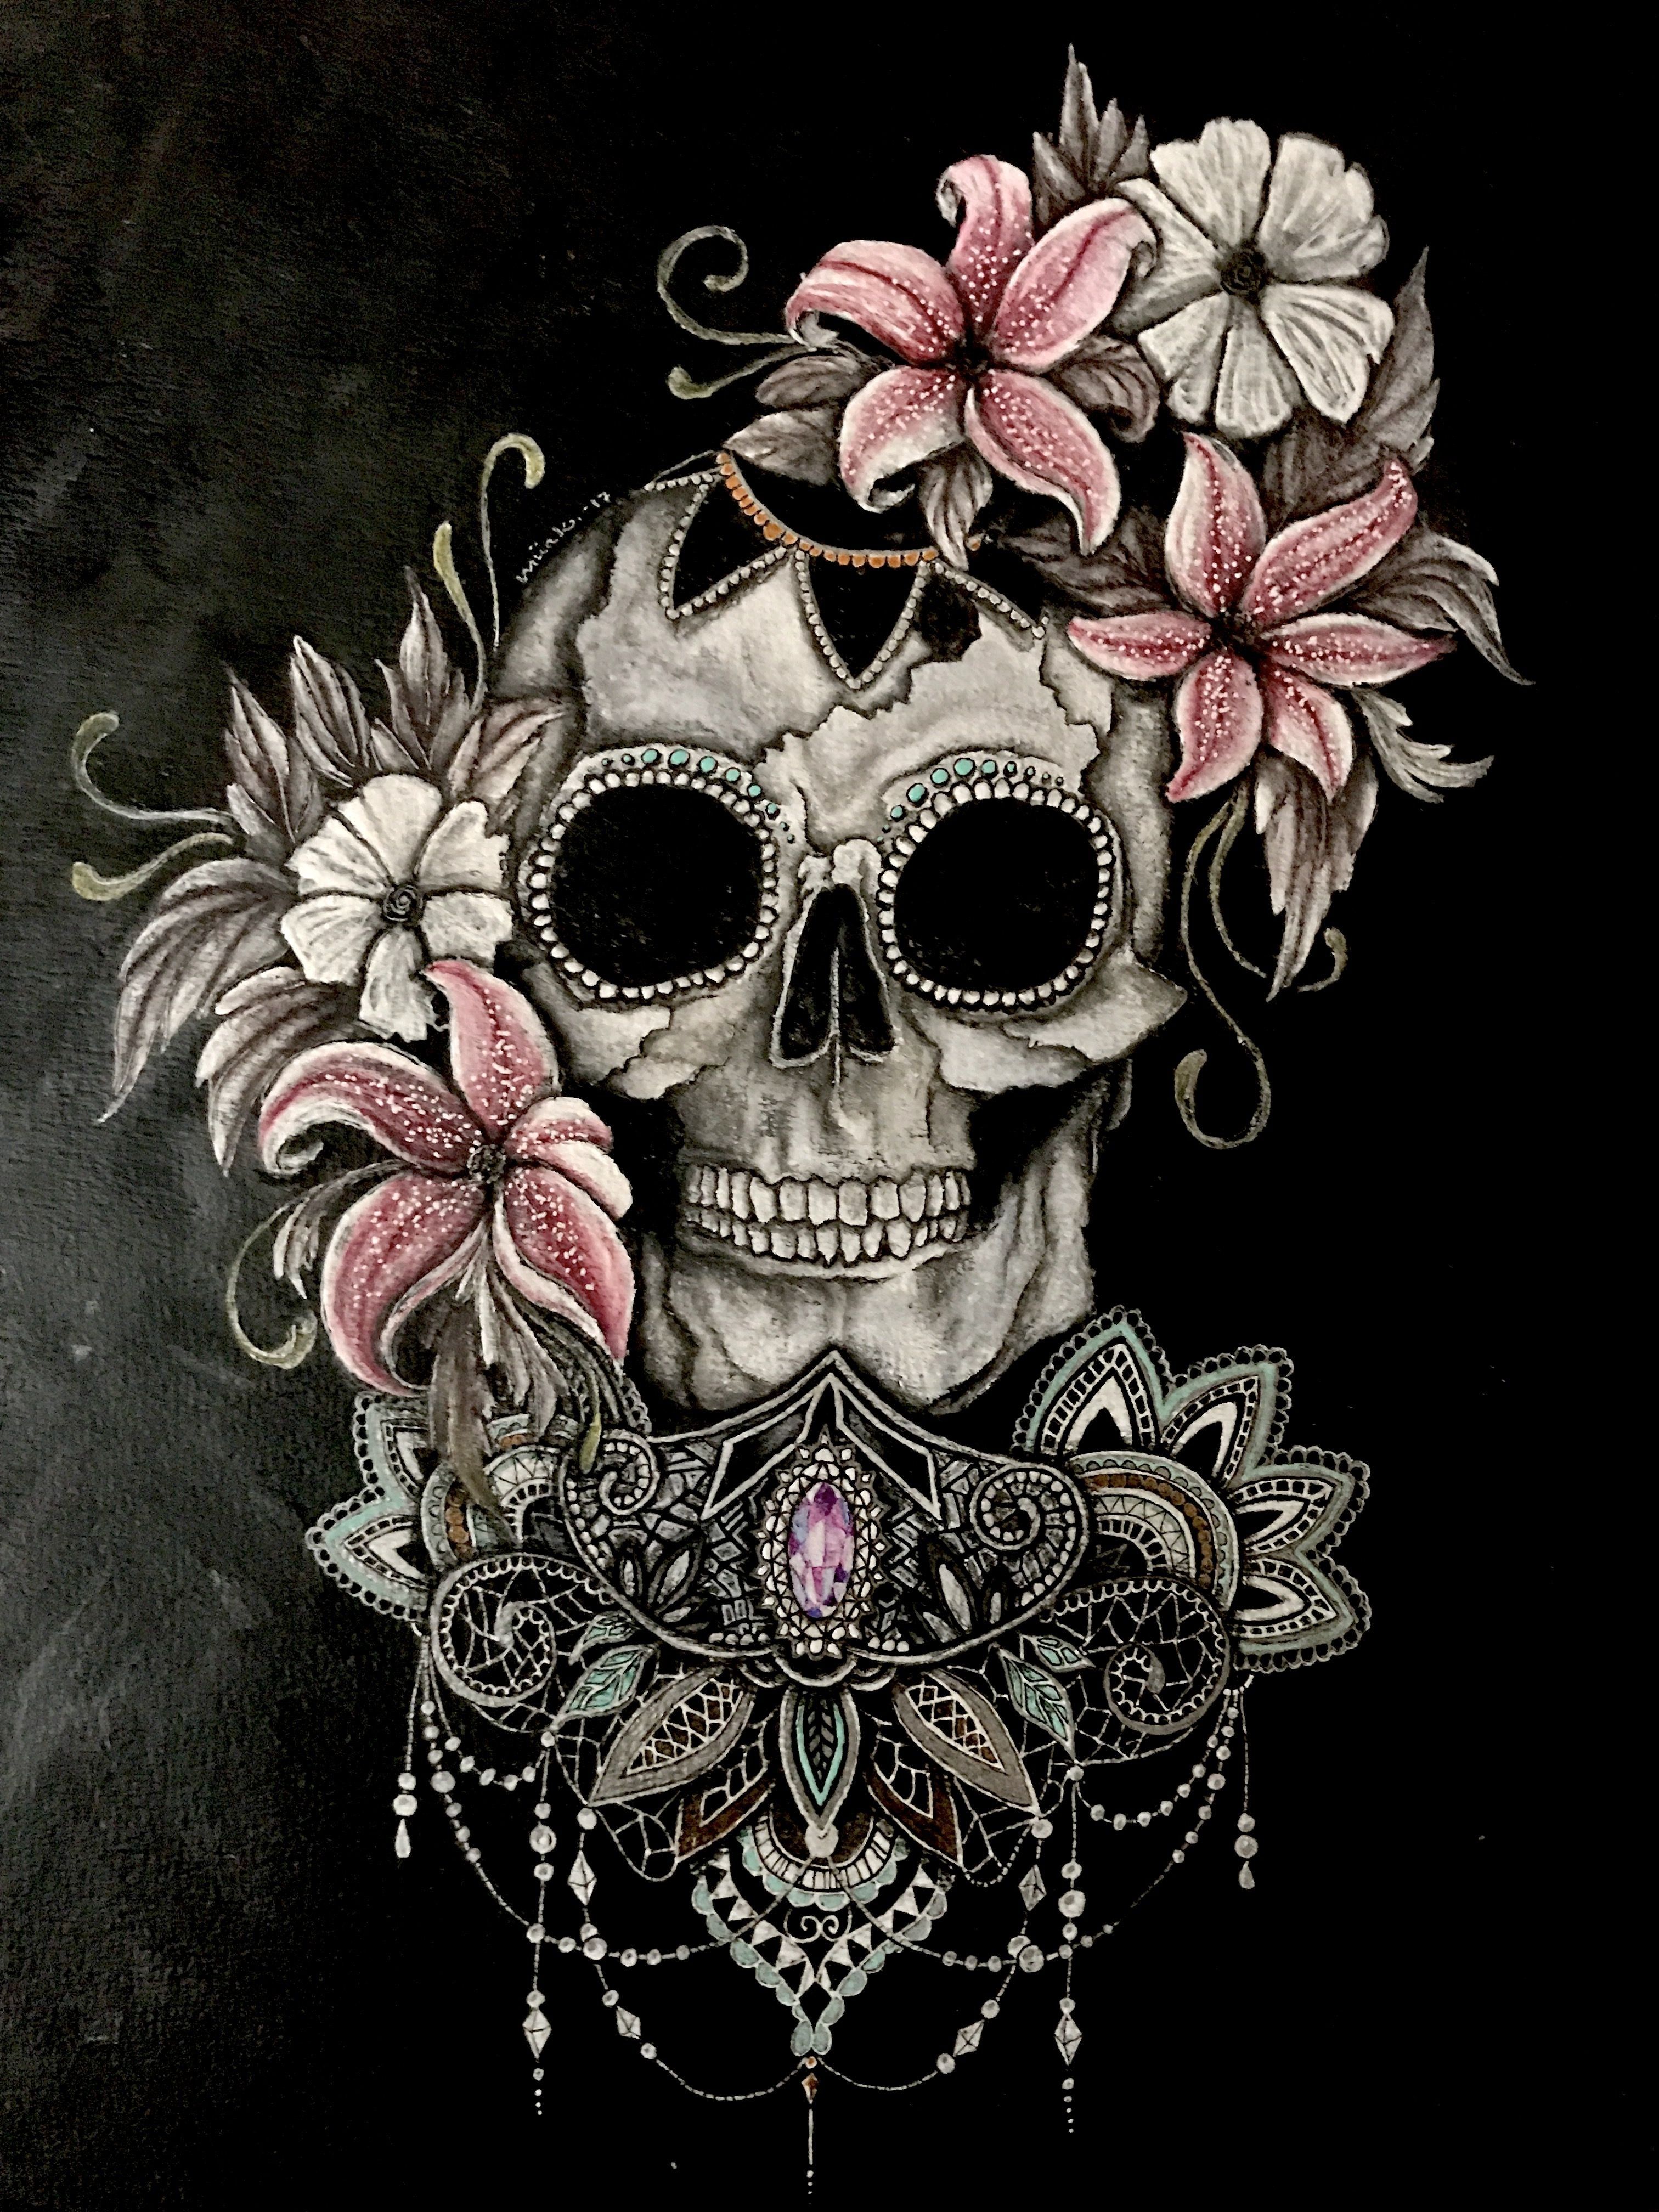 Flowering skull 2K wallpaper download